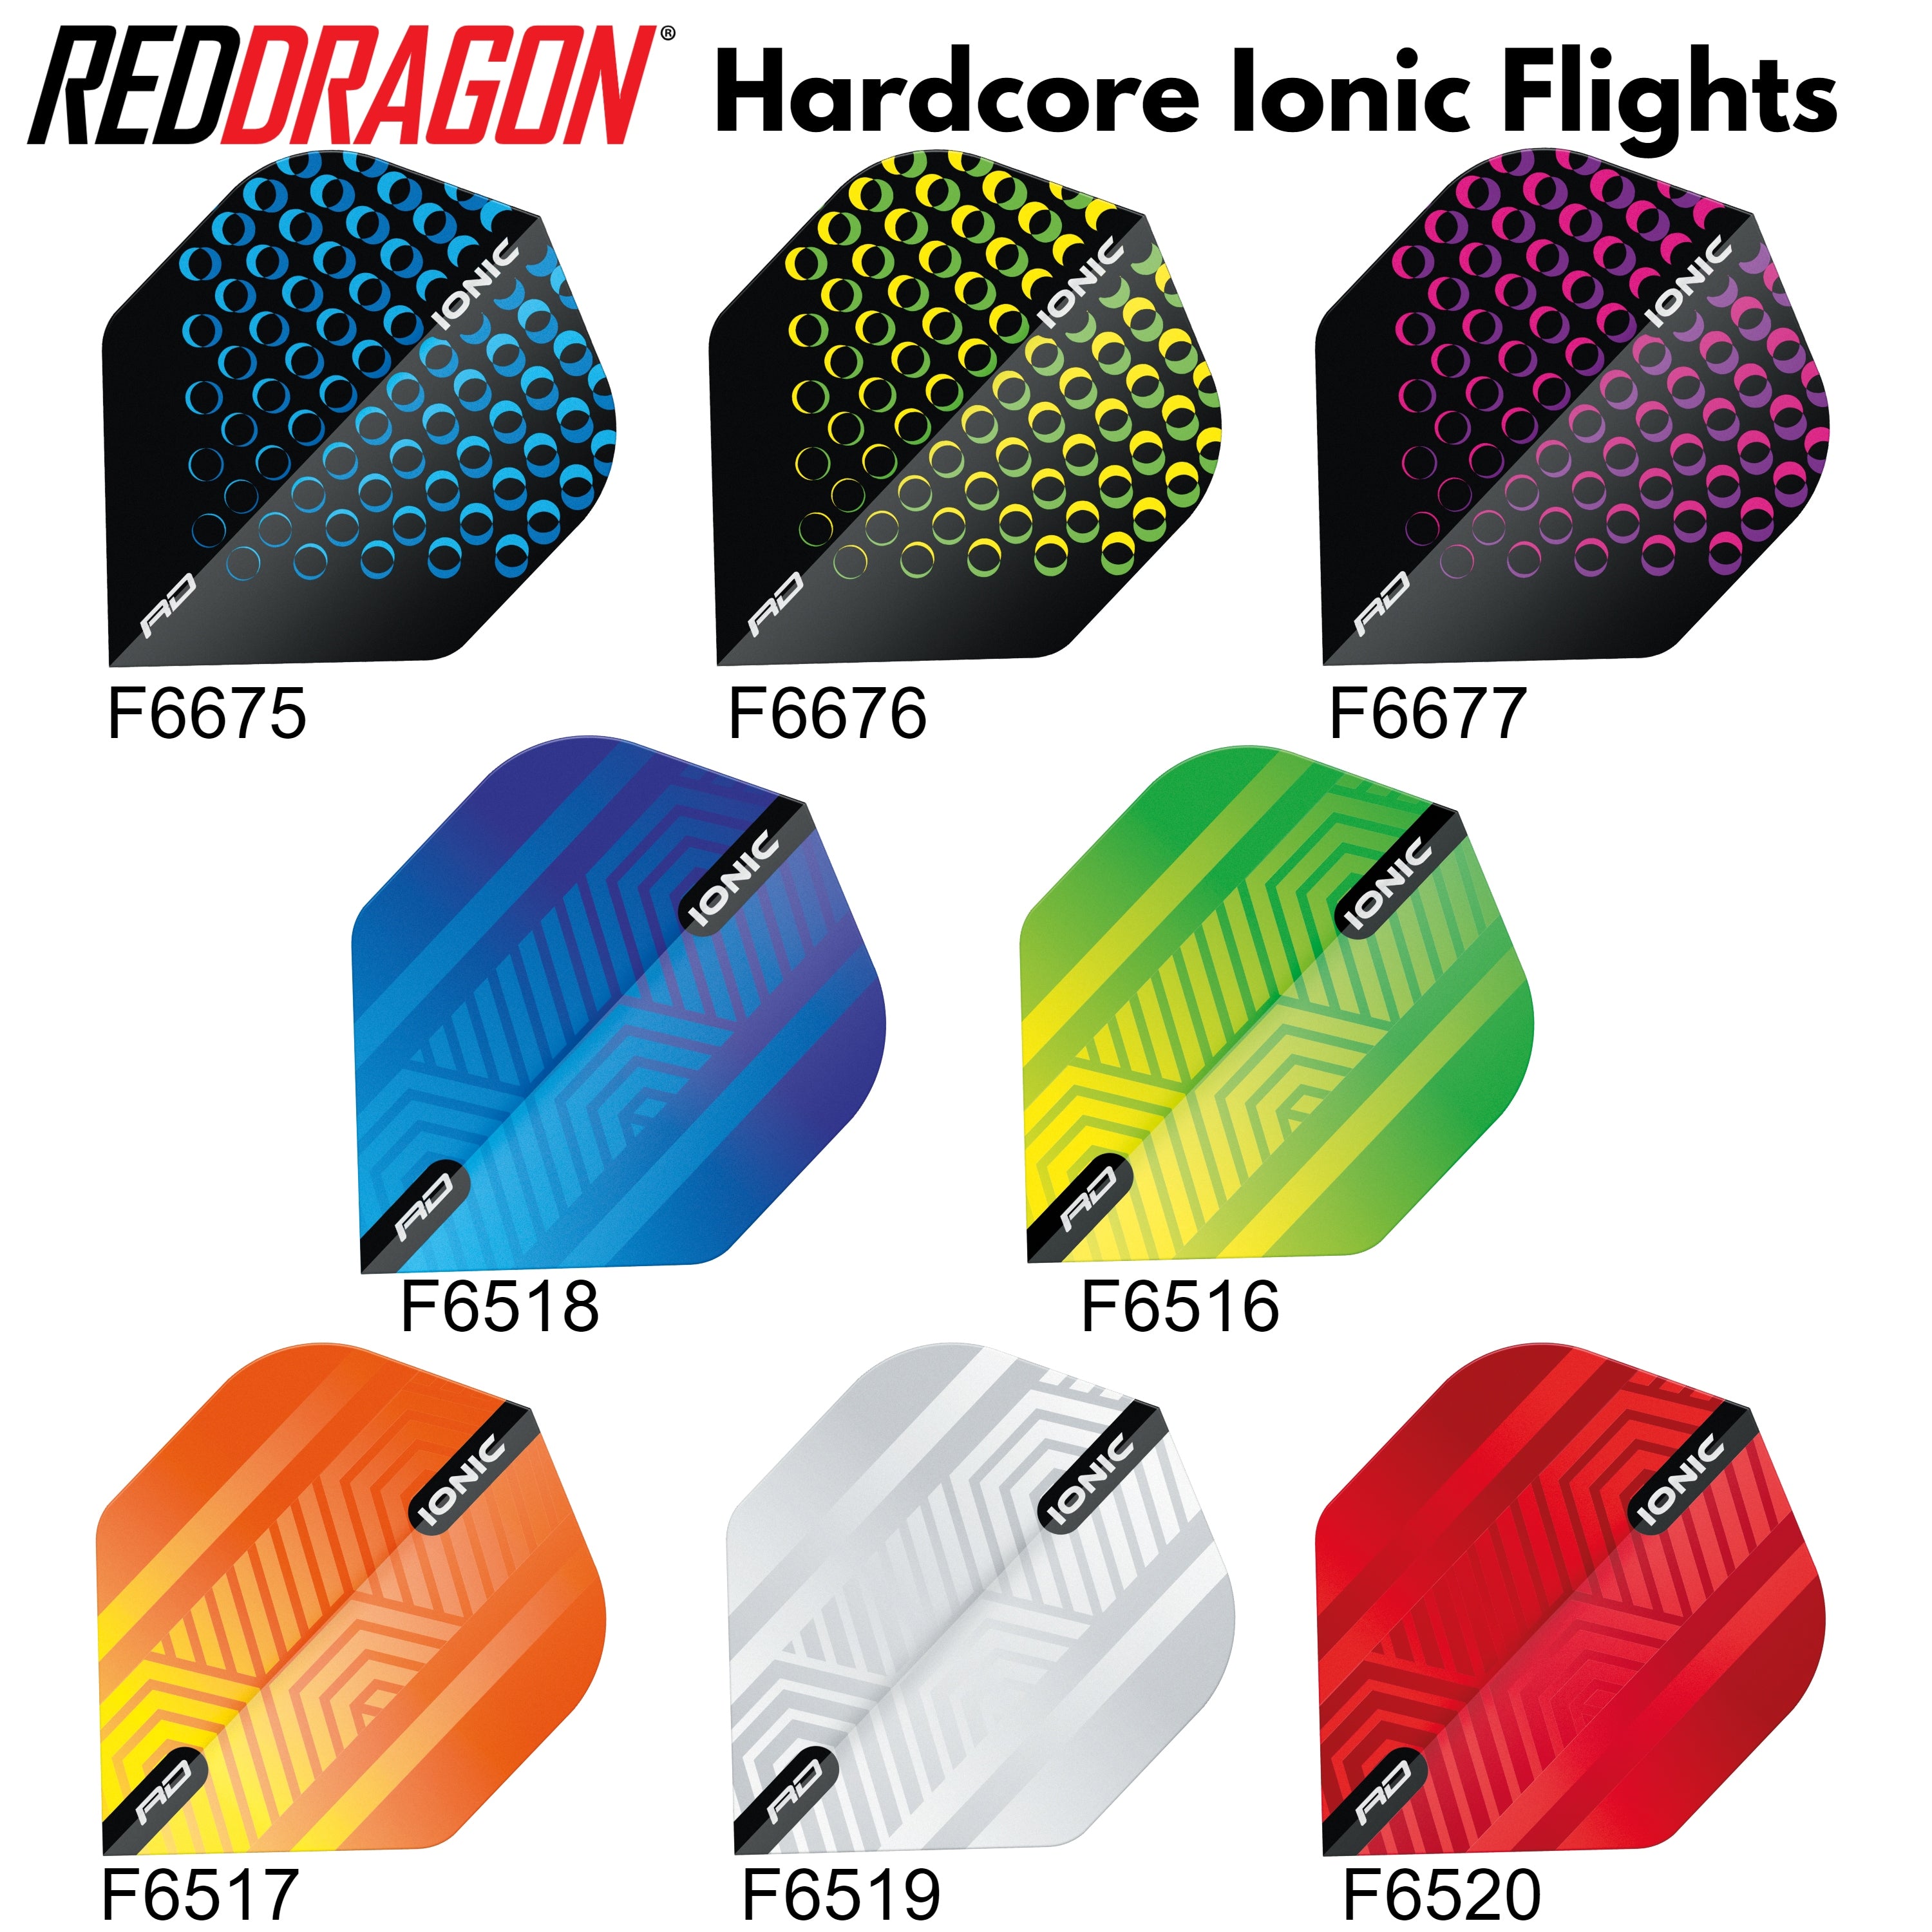 Red Dragon Hardcore Ionic Flights